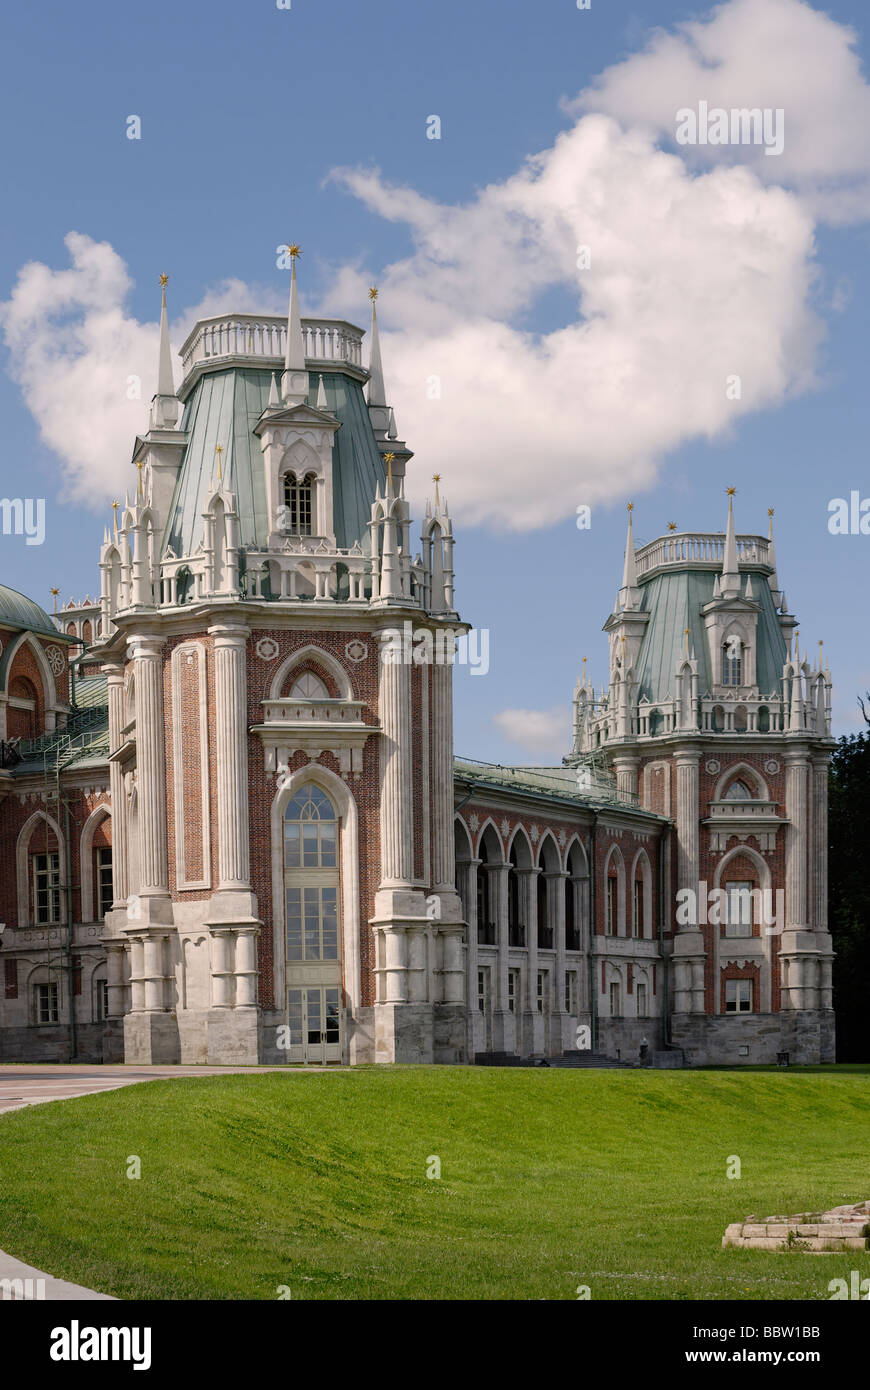 The Grand Palace (1786 -1796) in Tsaritsyno was built by Matvey Kazakov. Tsaritsyno estate, Moscow, Russia Stock Photo